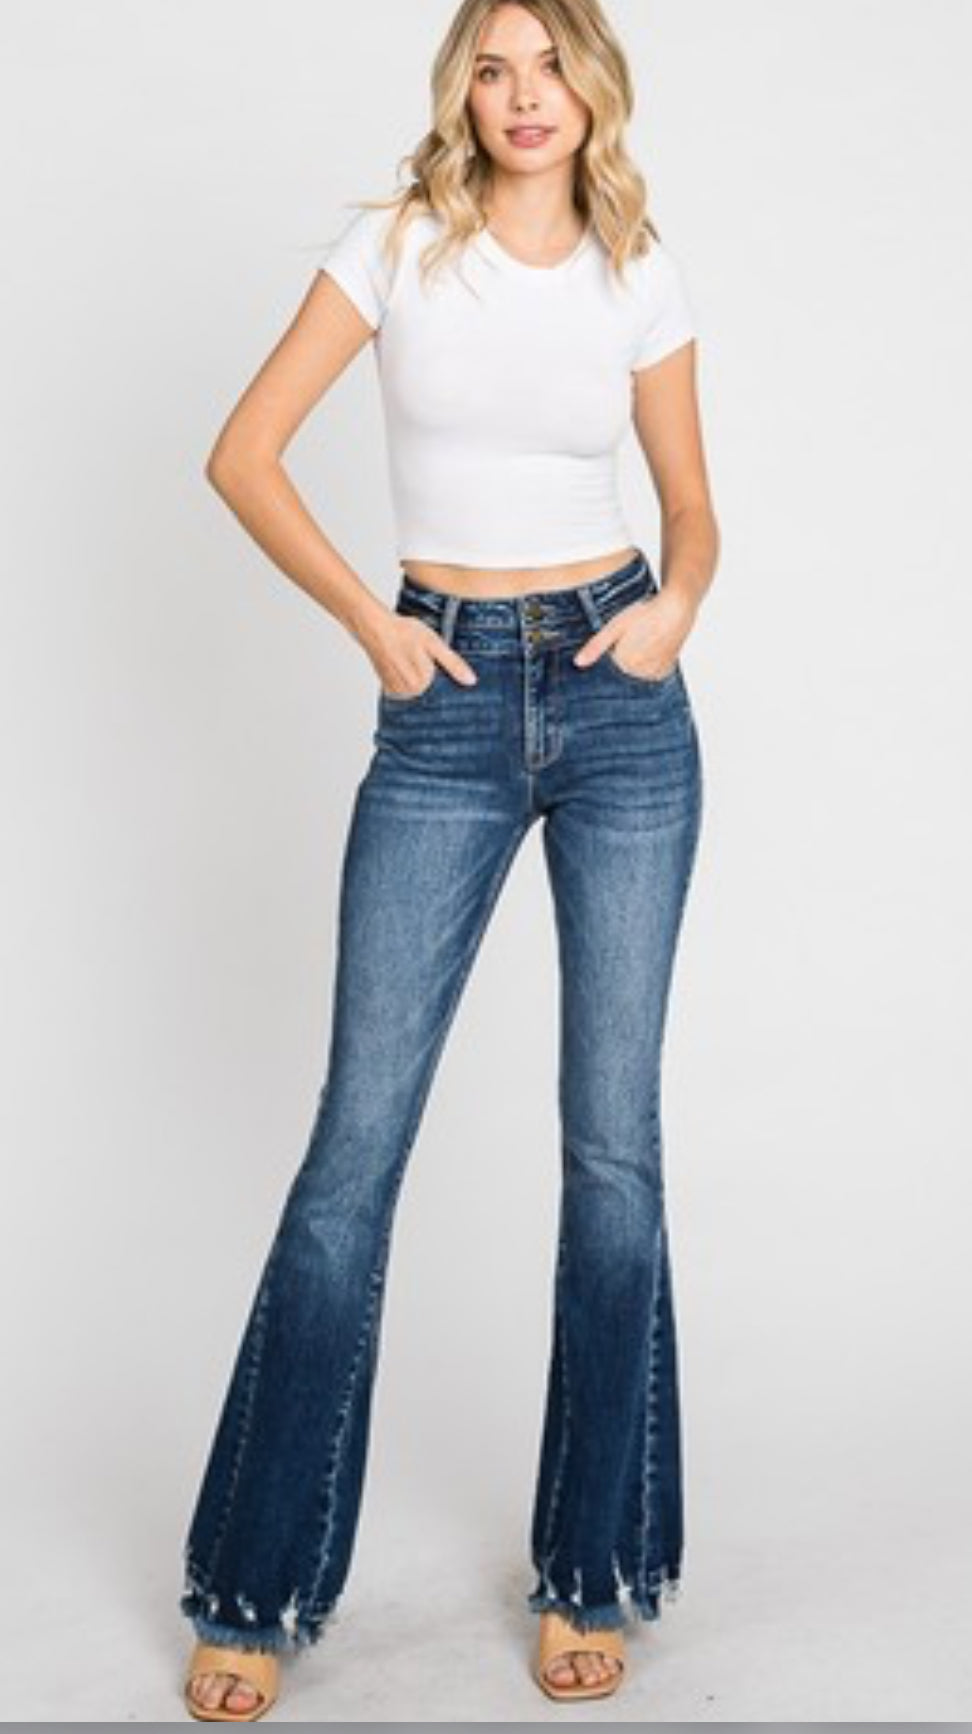 My girl jeans regular length high rise stretch flare